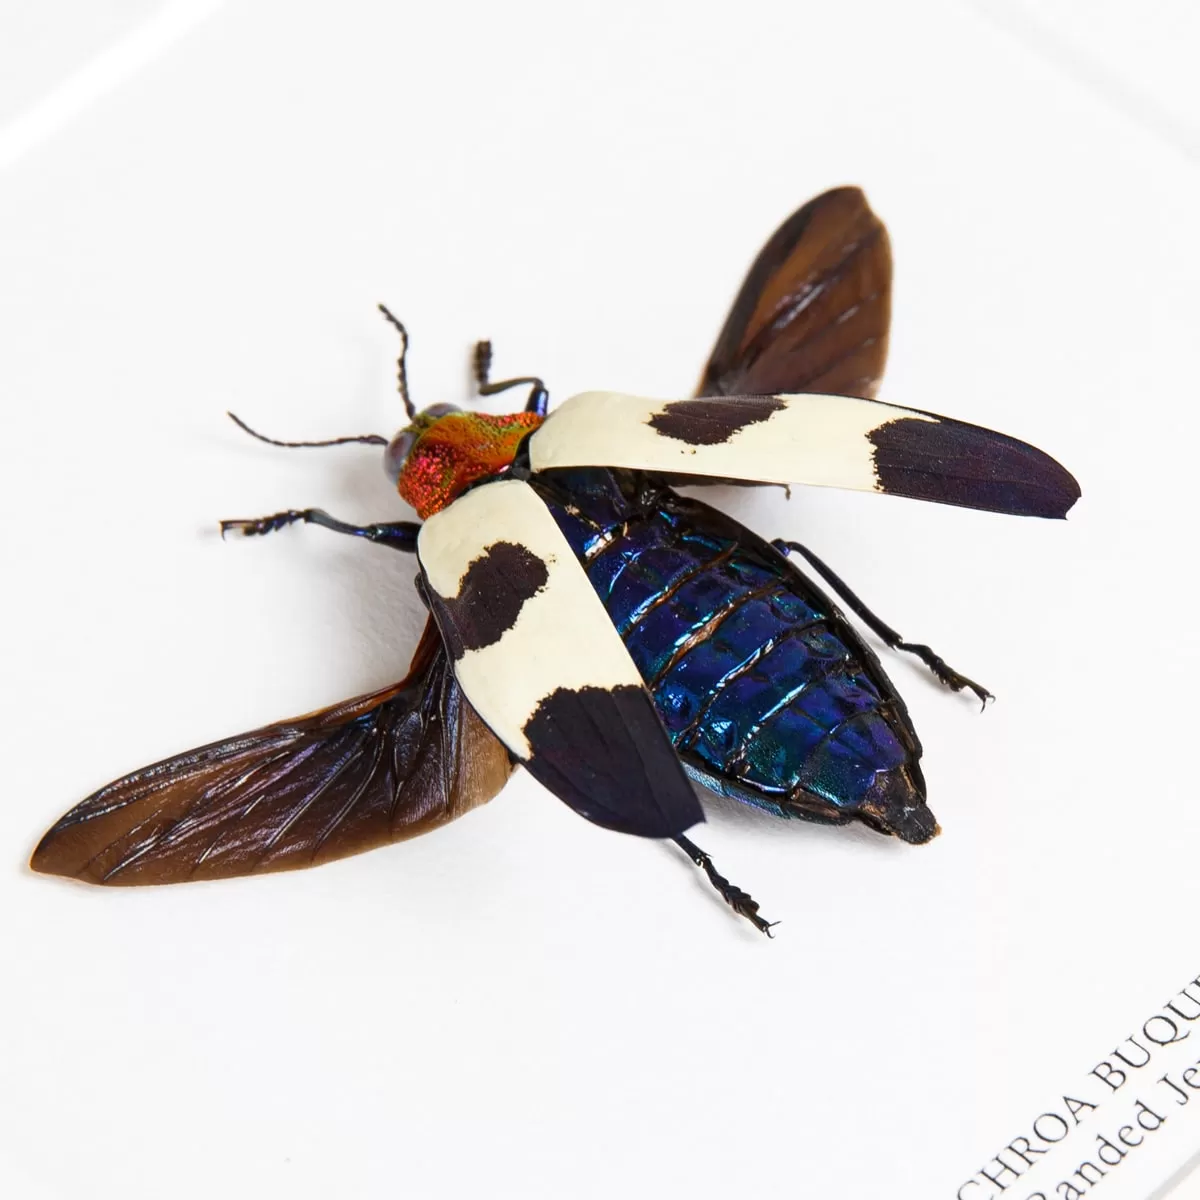 Banded Jewel Beetle in Box Frame (Chrysochroa buqueti rugicollis)